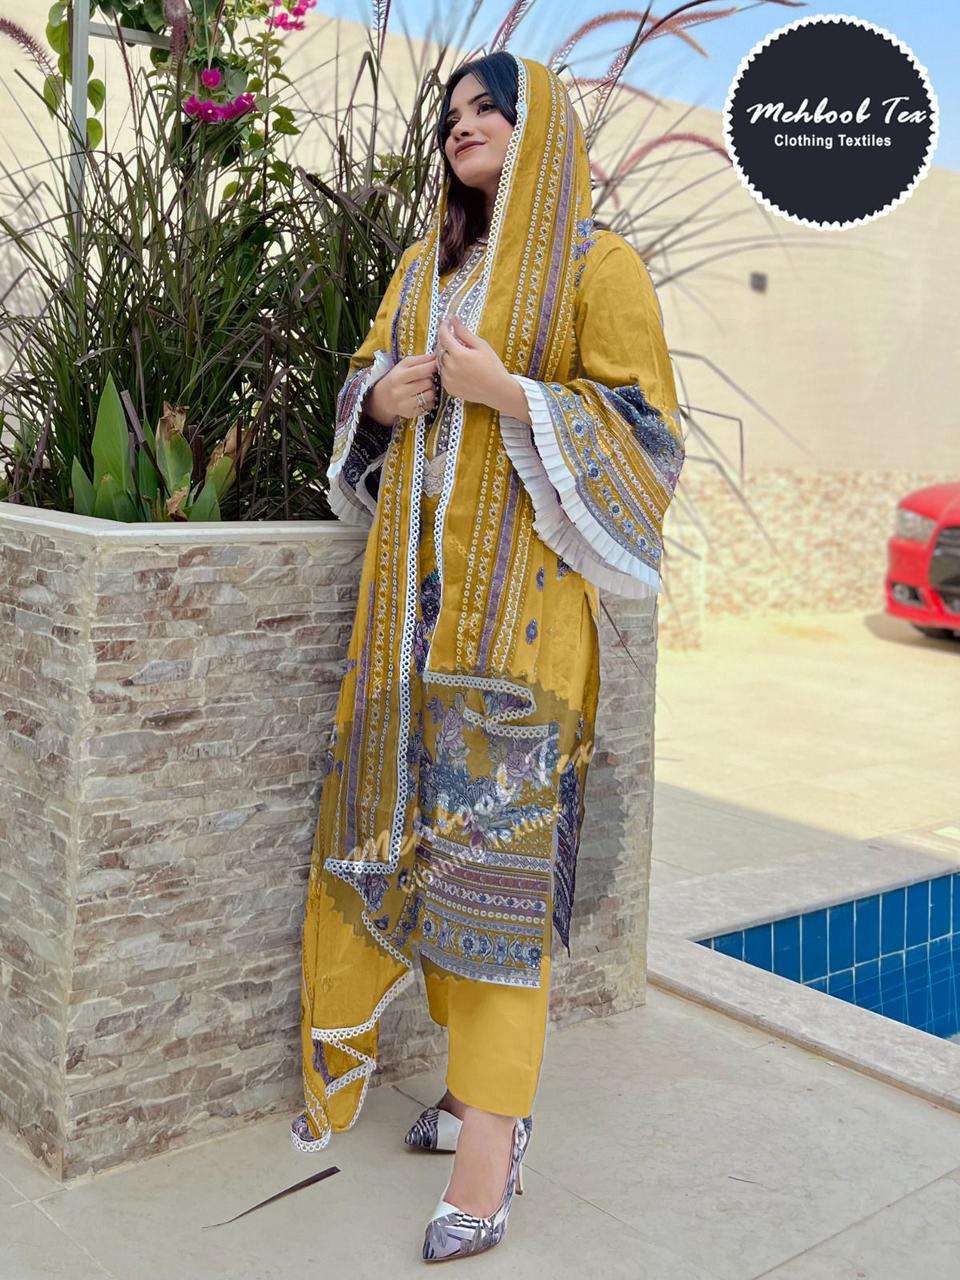 mehboob tex 1166 colour series designer wedding wear pakistani cotton suit at wholesaler price surat india gujarat